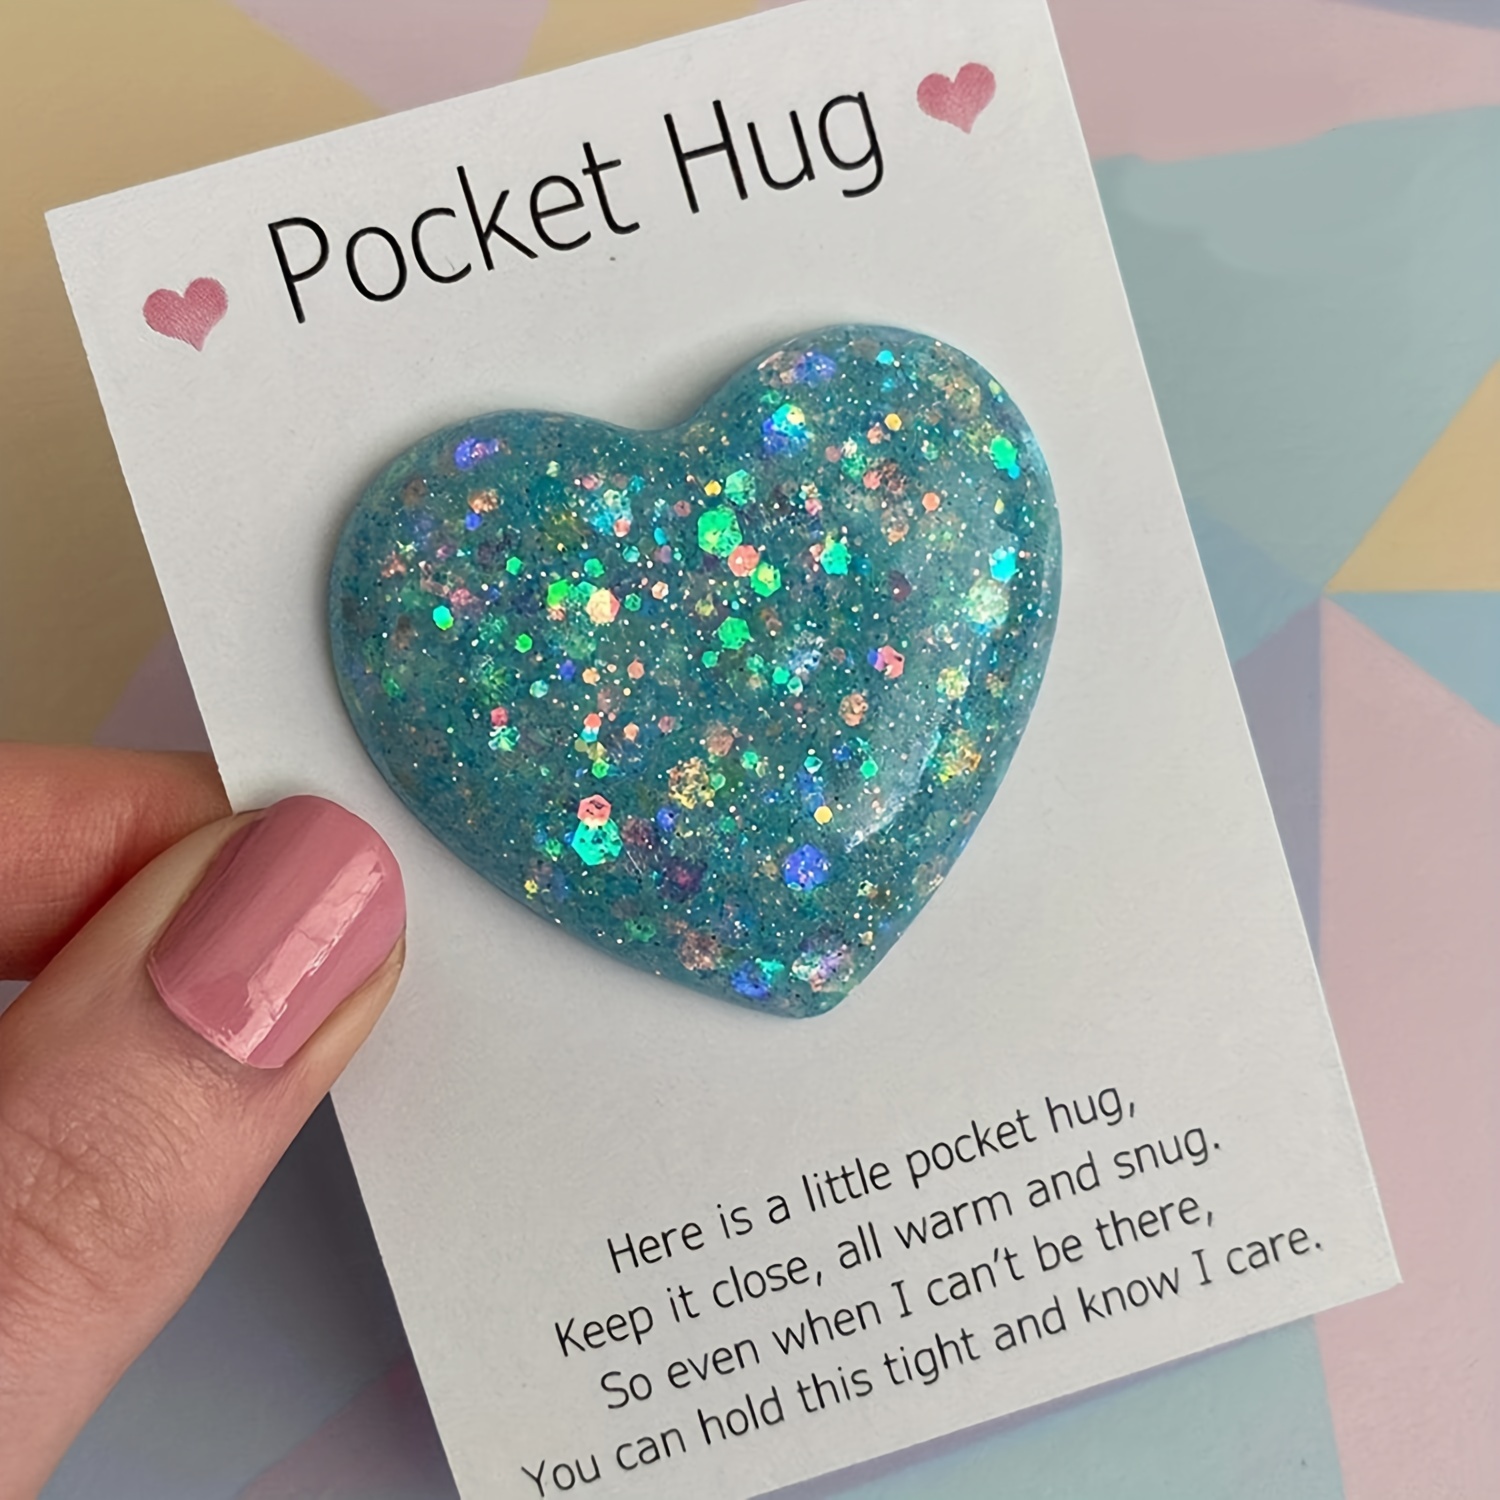 

1pc, Pocket Hugging Heart Pocket Hugging Love Gift Small Hug Decoration Glass Heart Glitter Heart Gift For Girls Women Valentine's Day, Birthday, Wedding, Party Favors